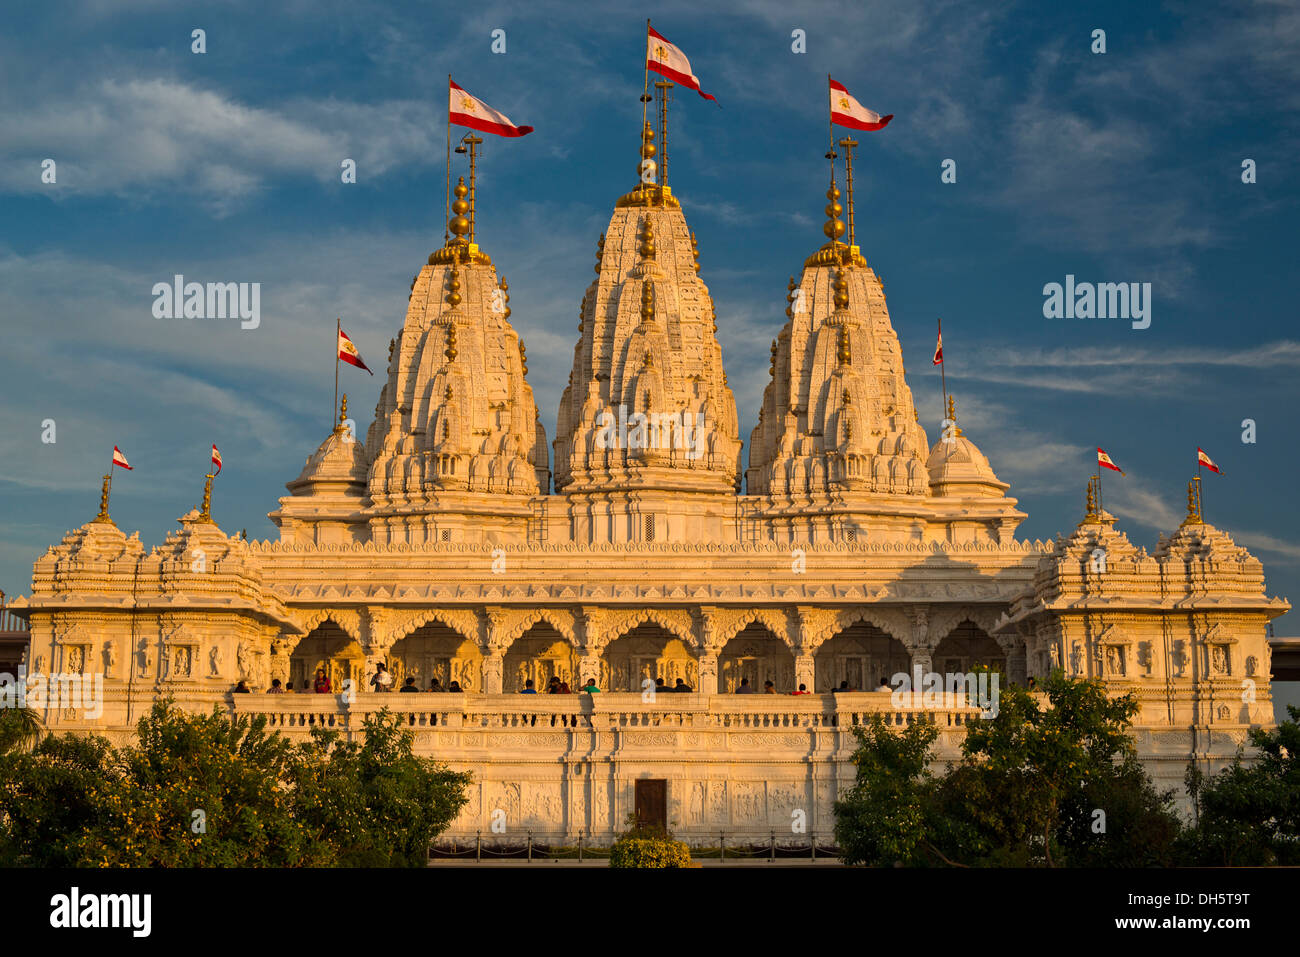 Shri Swaminarayan Mandir, Hindu temple of the Swaminarayana sect, Bhuj, Gujarat, India Stock Photo